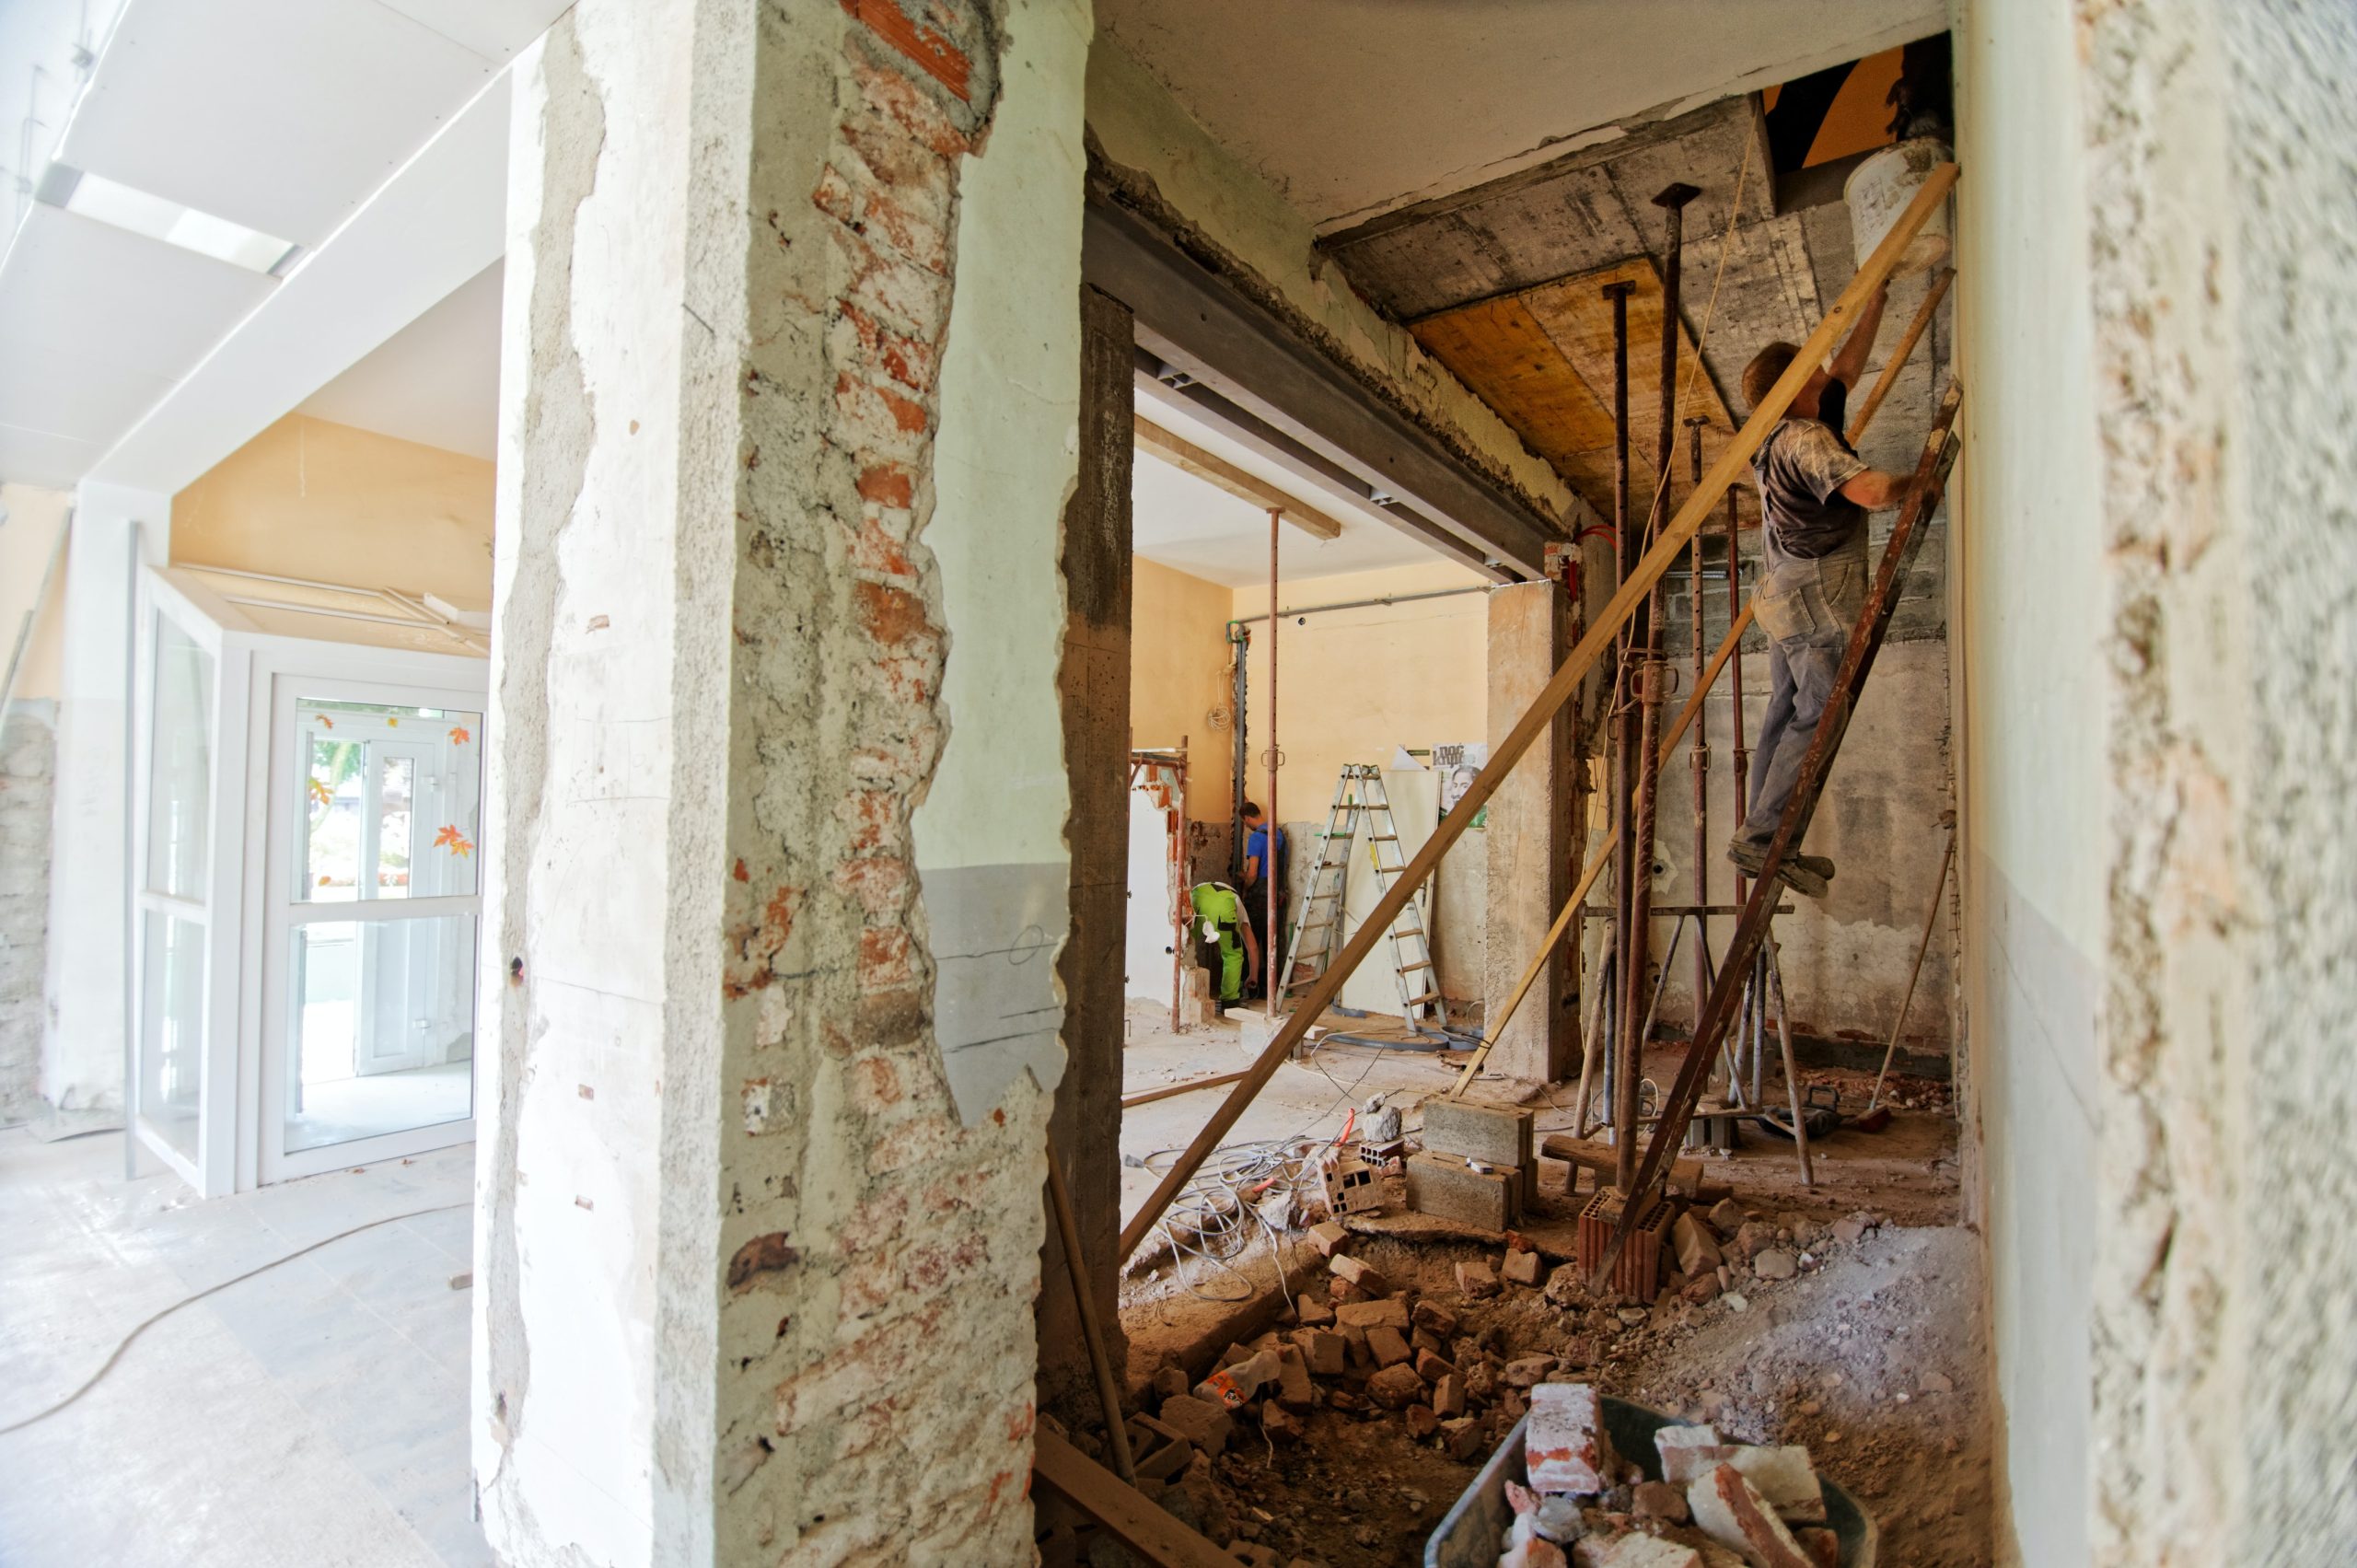 Illustration of the demolition interior